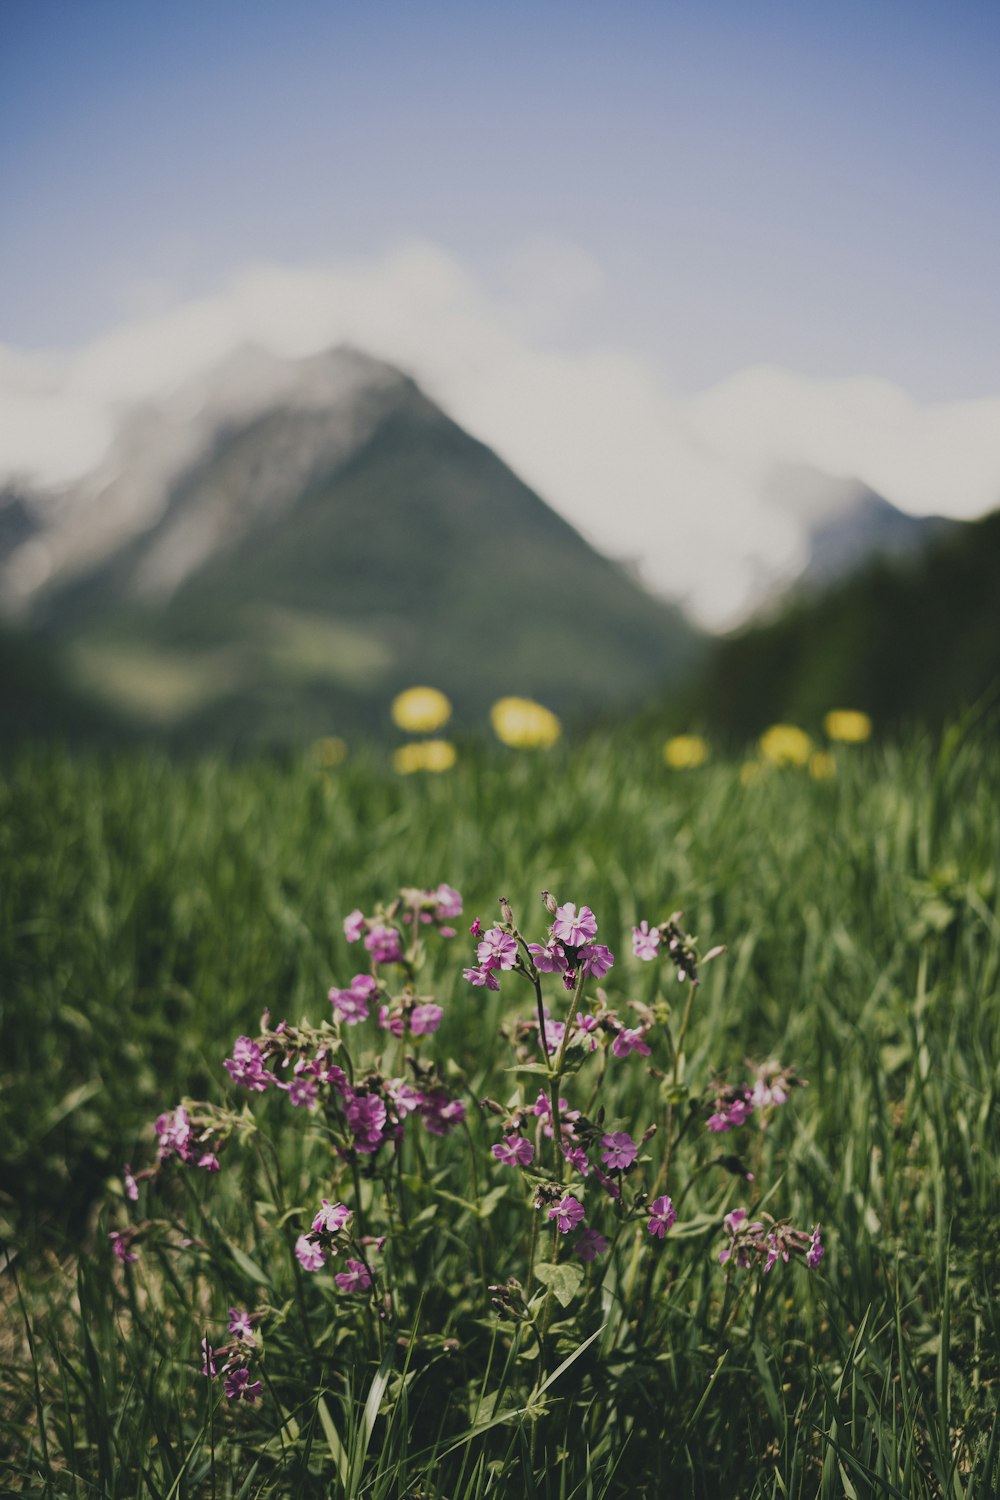 purple flowers on green grass field near mountain during daytime